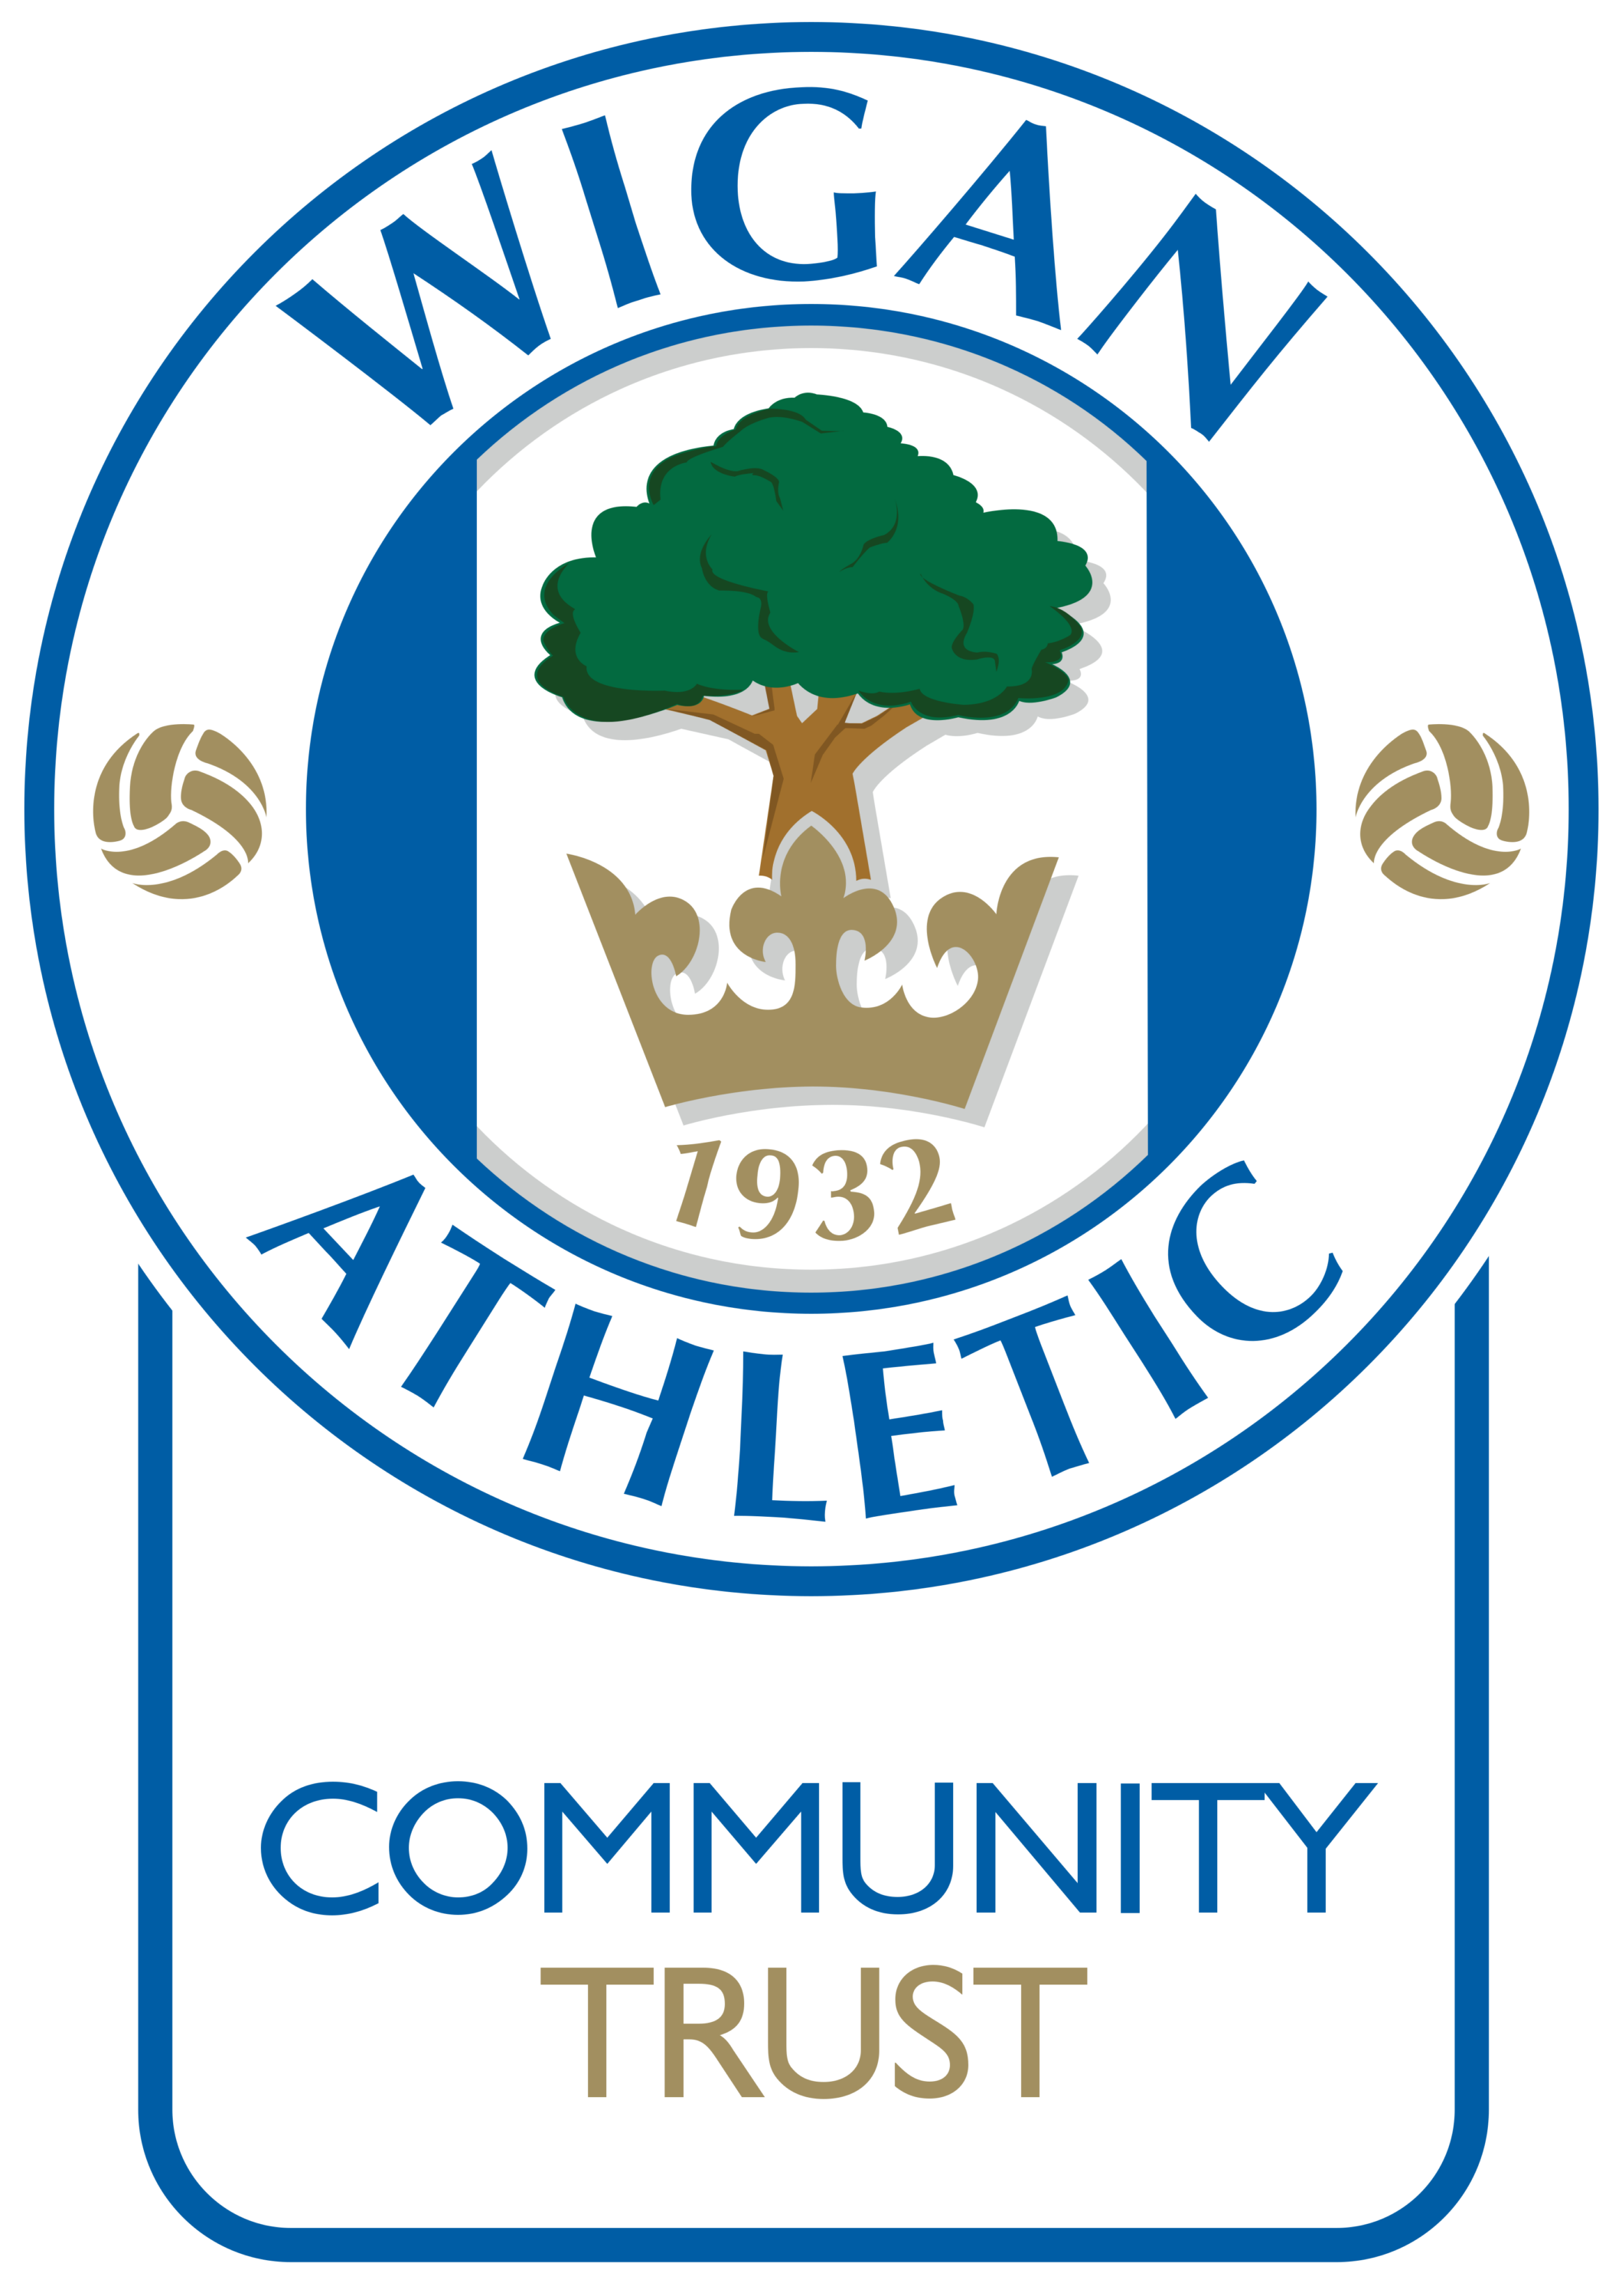 Wigan Athletic Community Trust Logo